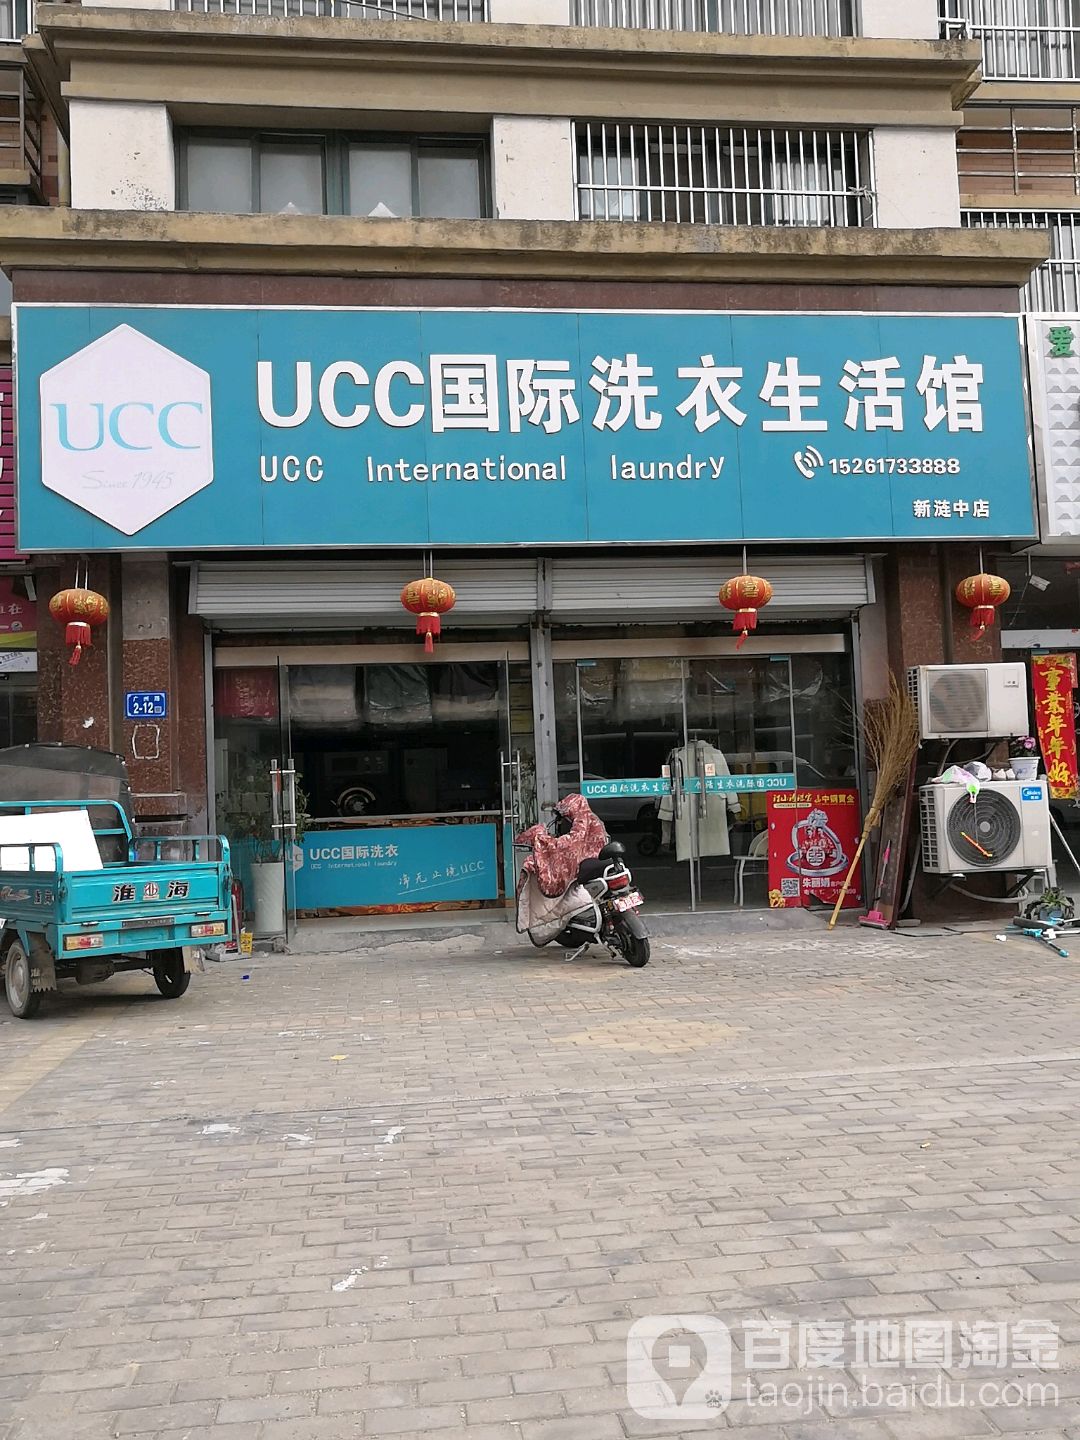 UCC国际洗衣生活馆(新涟中店)